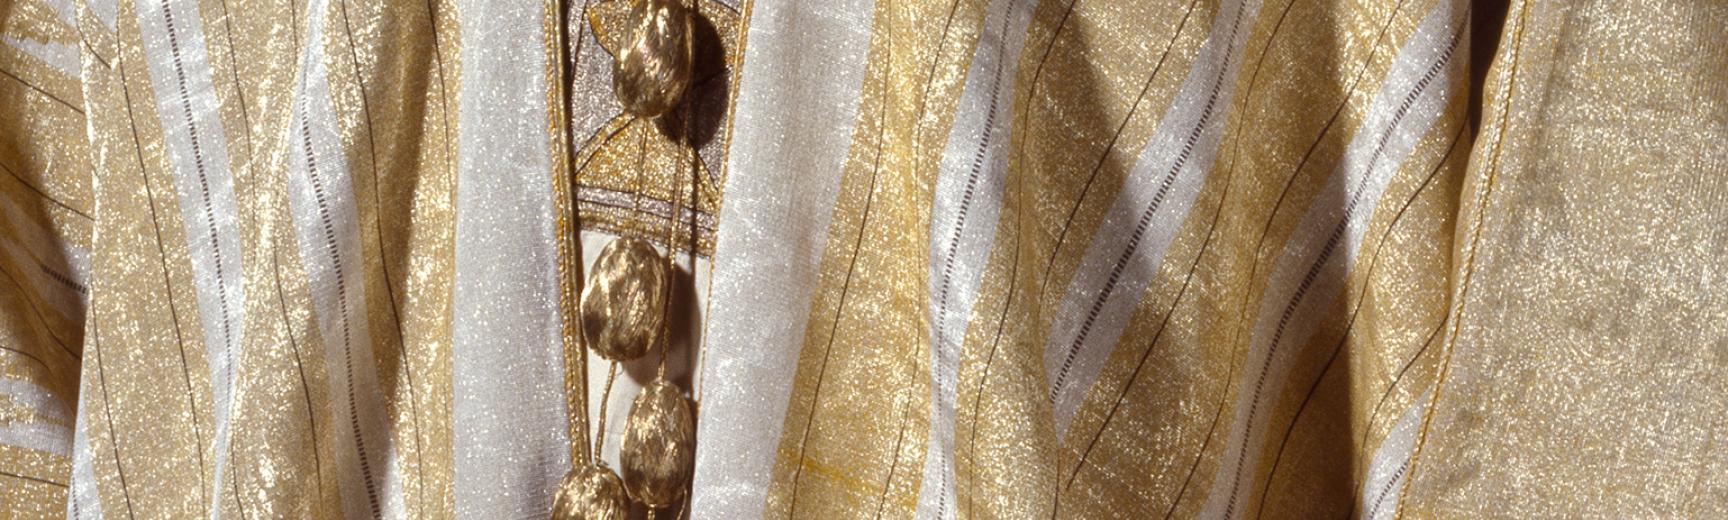 Arab robe worn by T. E. Lawrence 